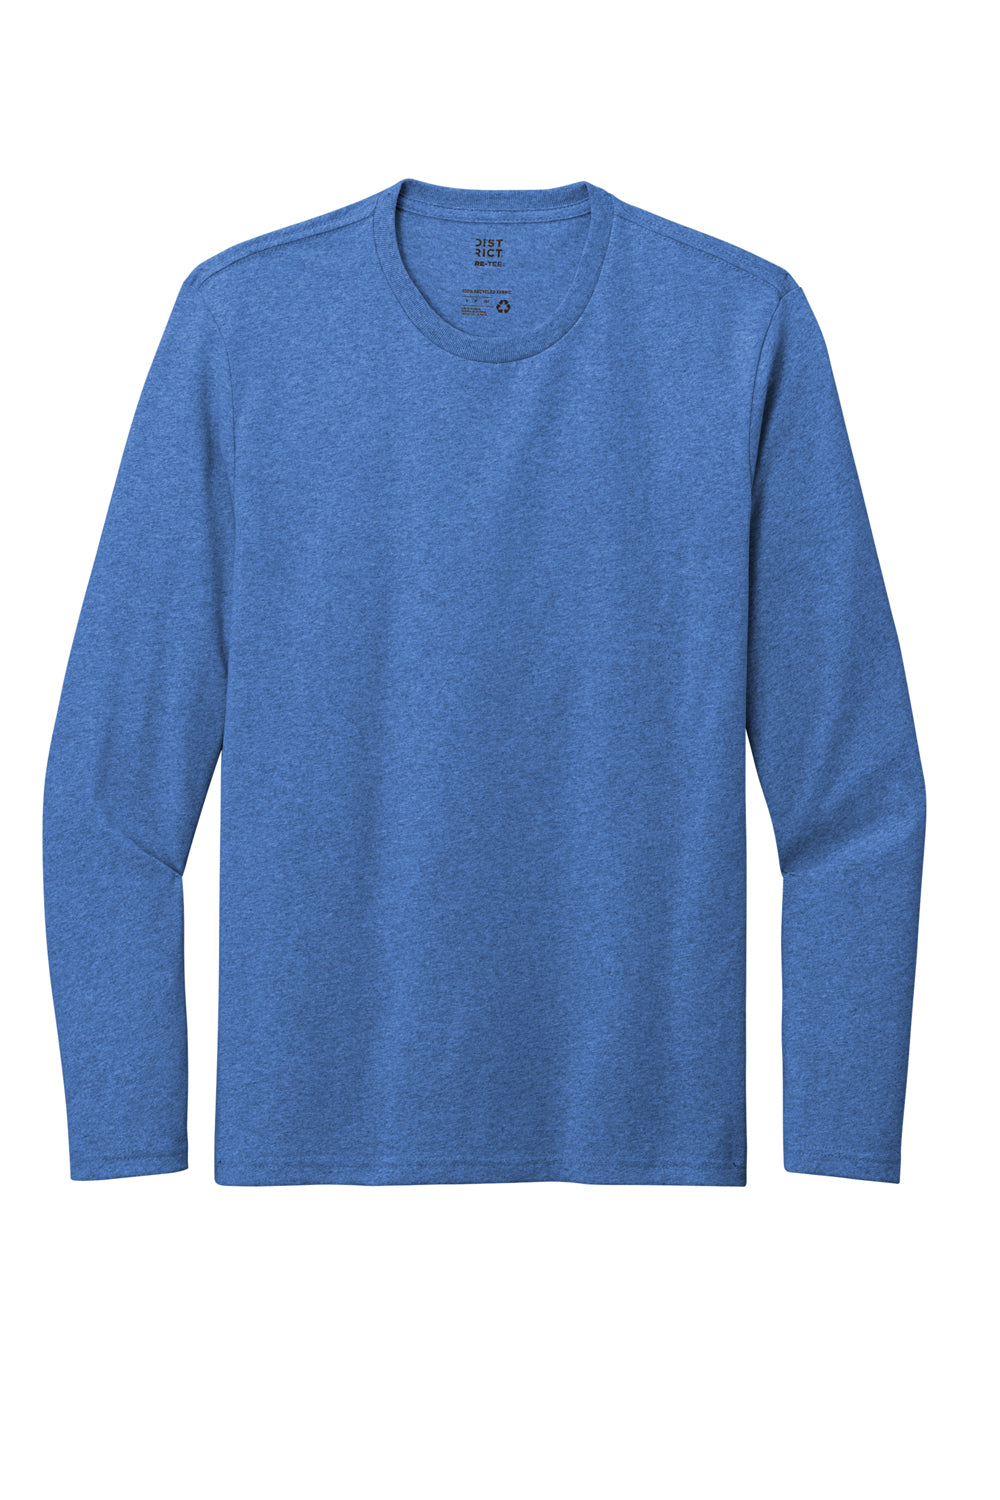 District DT8003 Re-Tee Long Sleeve Crewneck T-Shirt Heather Blue Flat Front